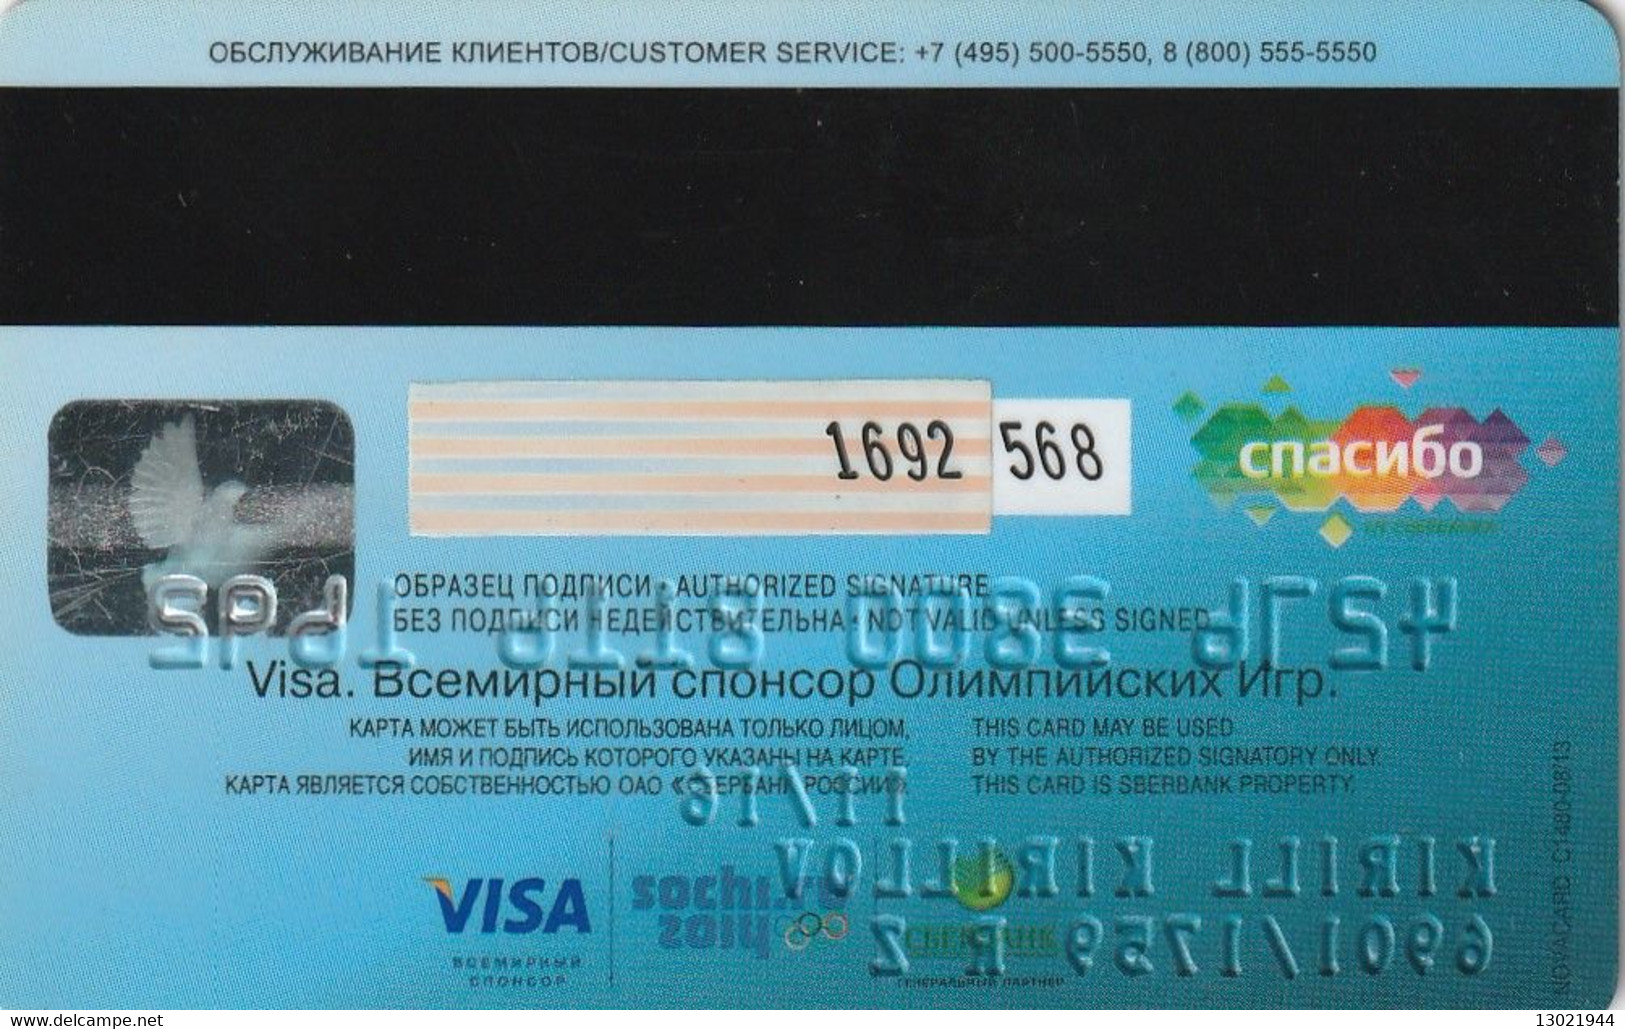 RUSSIA   BANK CARD     Sberbank  - Sochi 2014 Snowboard 11/16 VISA - Krediet Kaarten (vervaldatum Min. 10 Jaar)